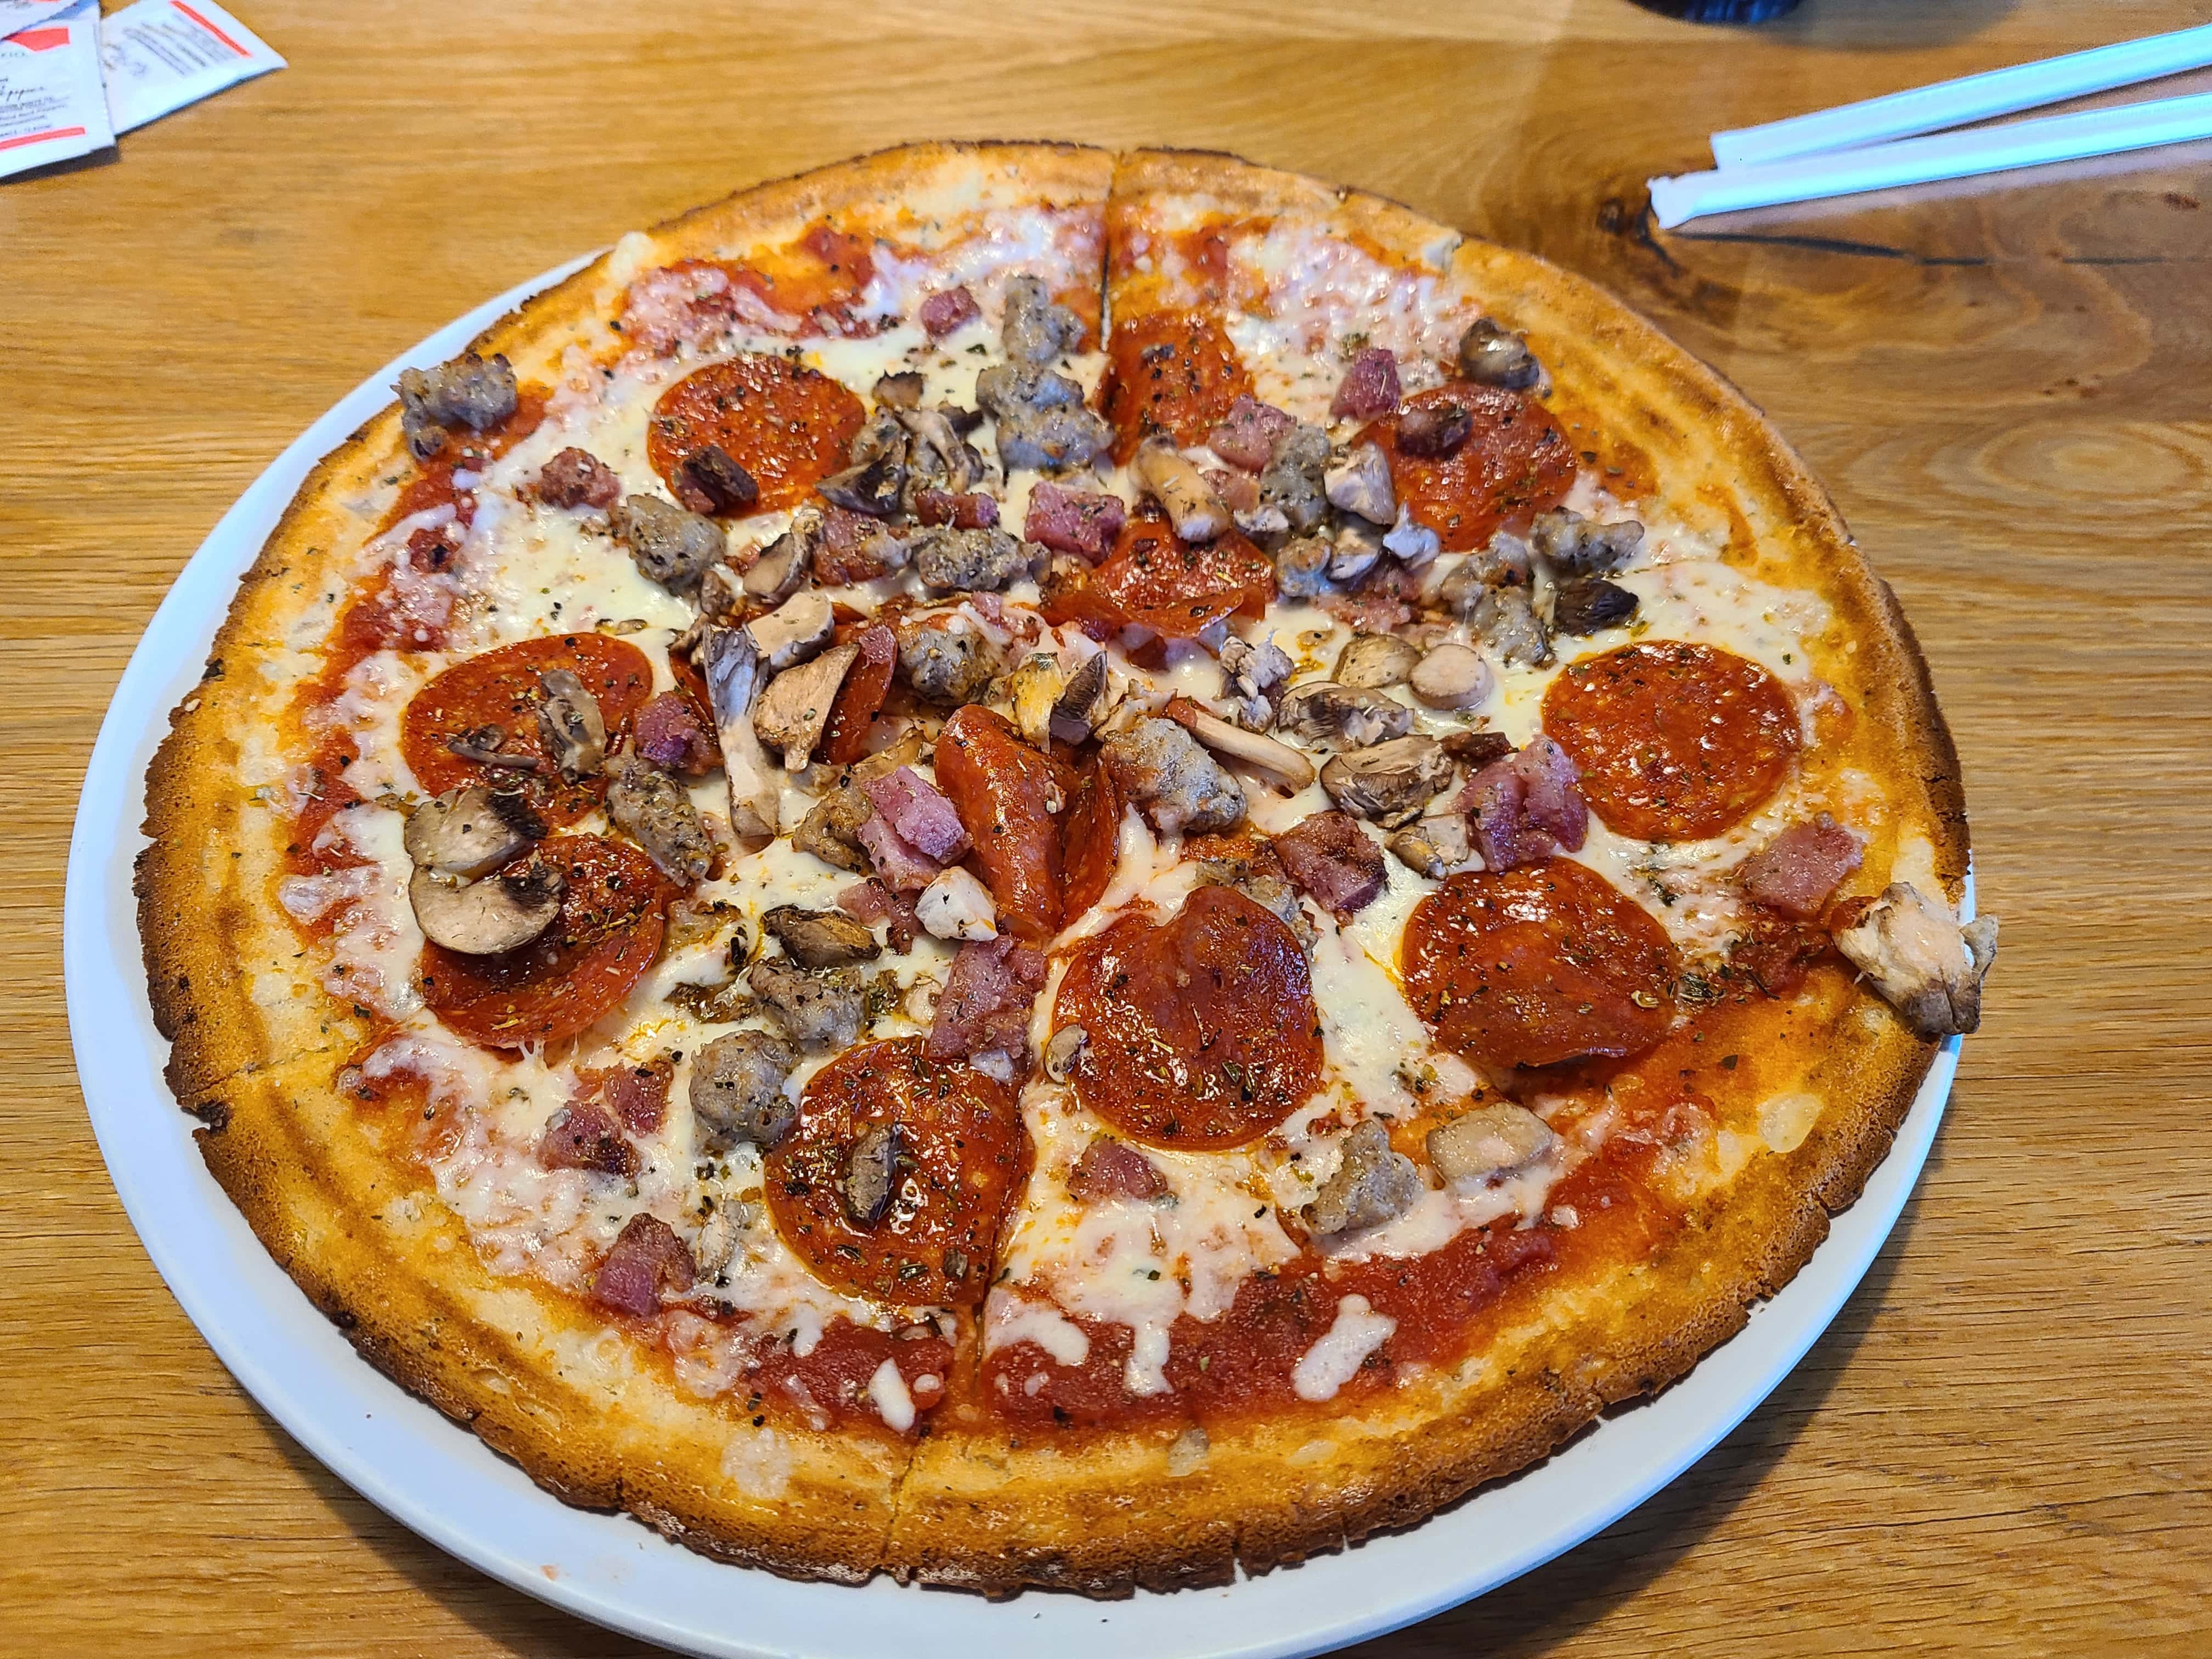 MOD Pizza - California (MD 20619), US, pizza restaurant near me